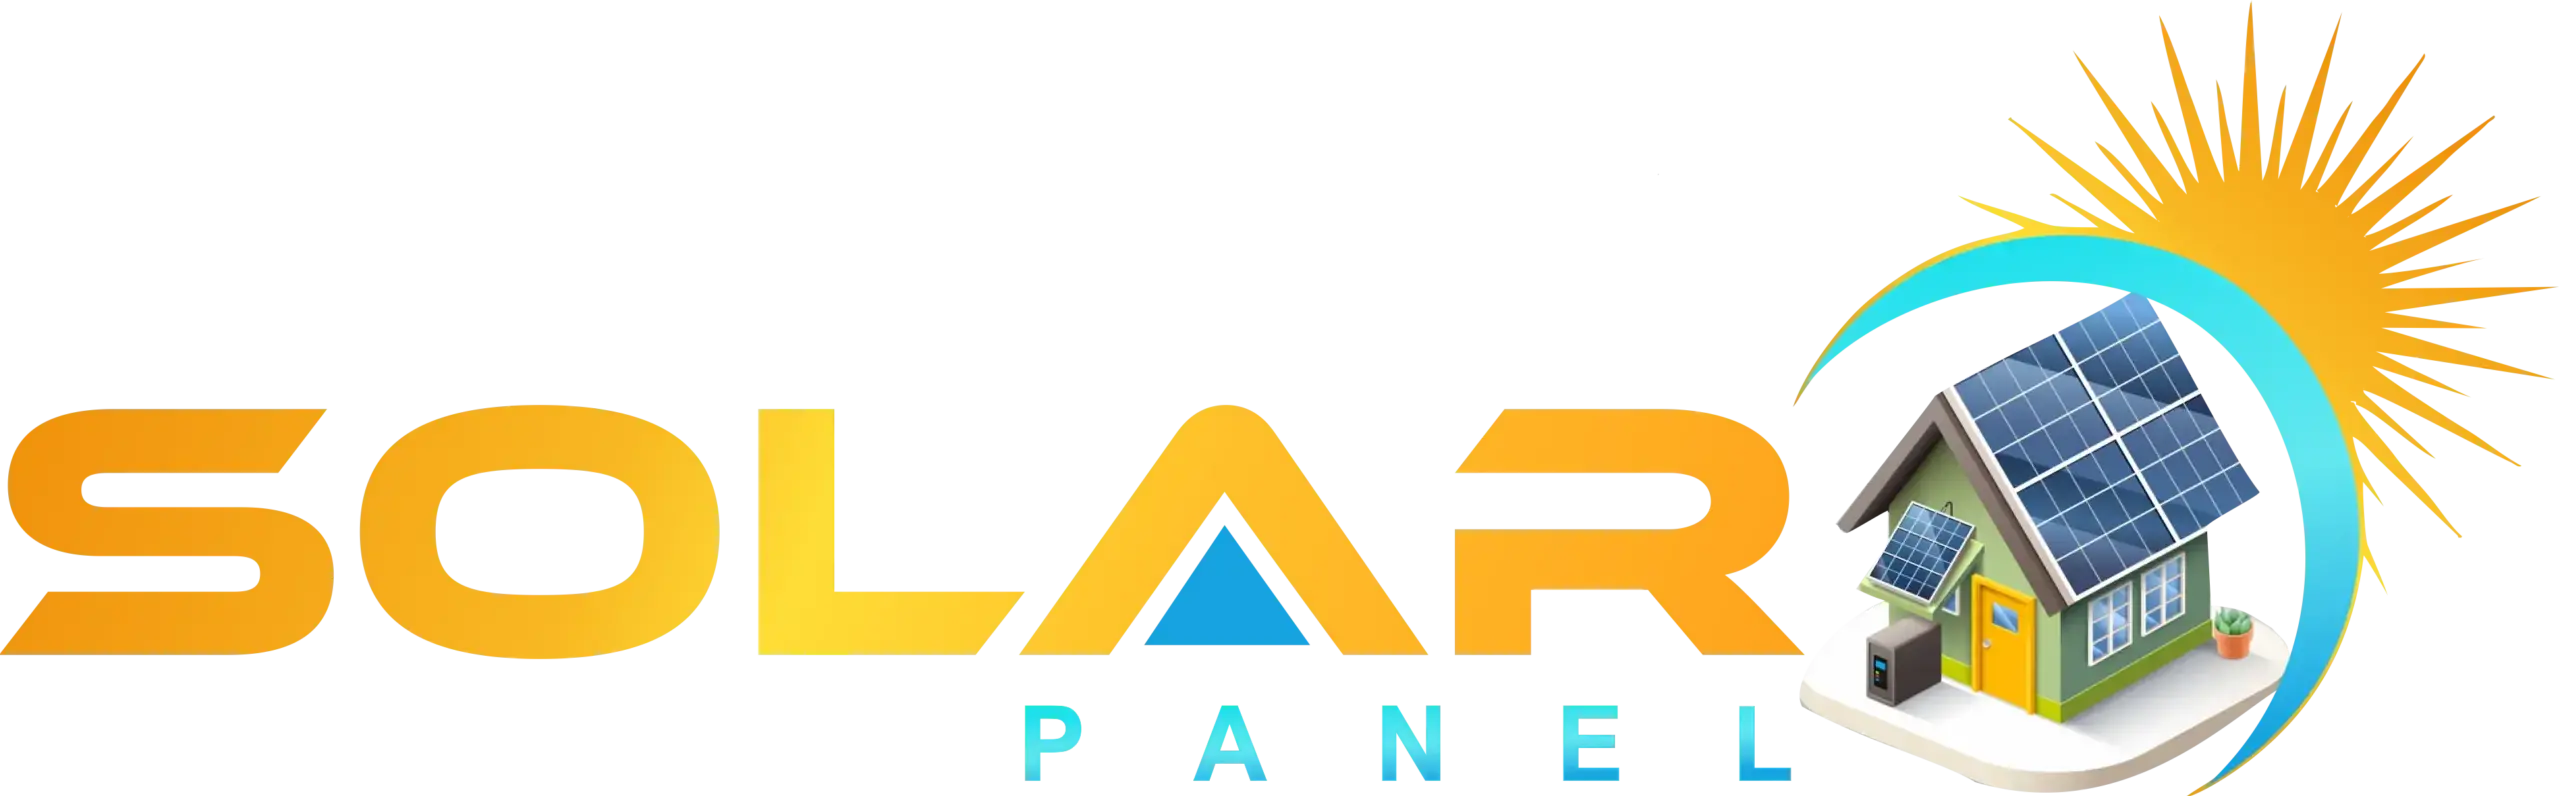 solar panel price pakistan logo